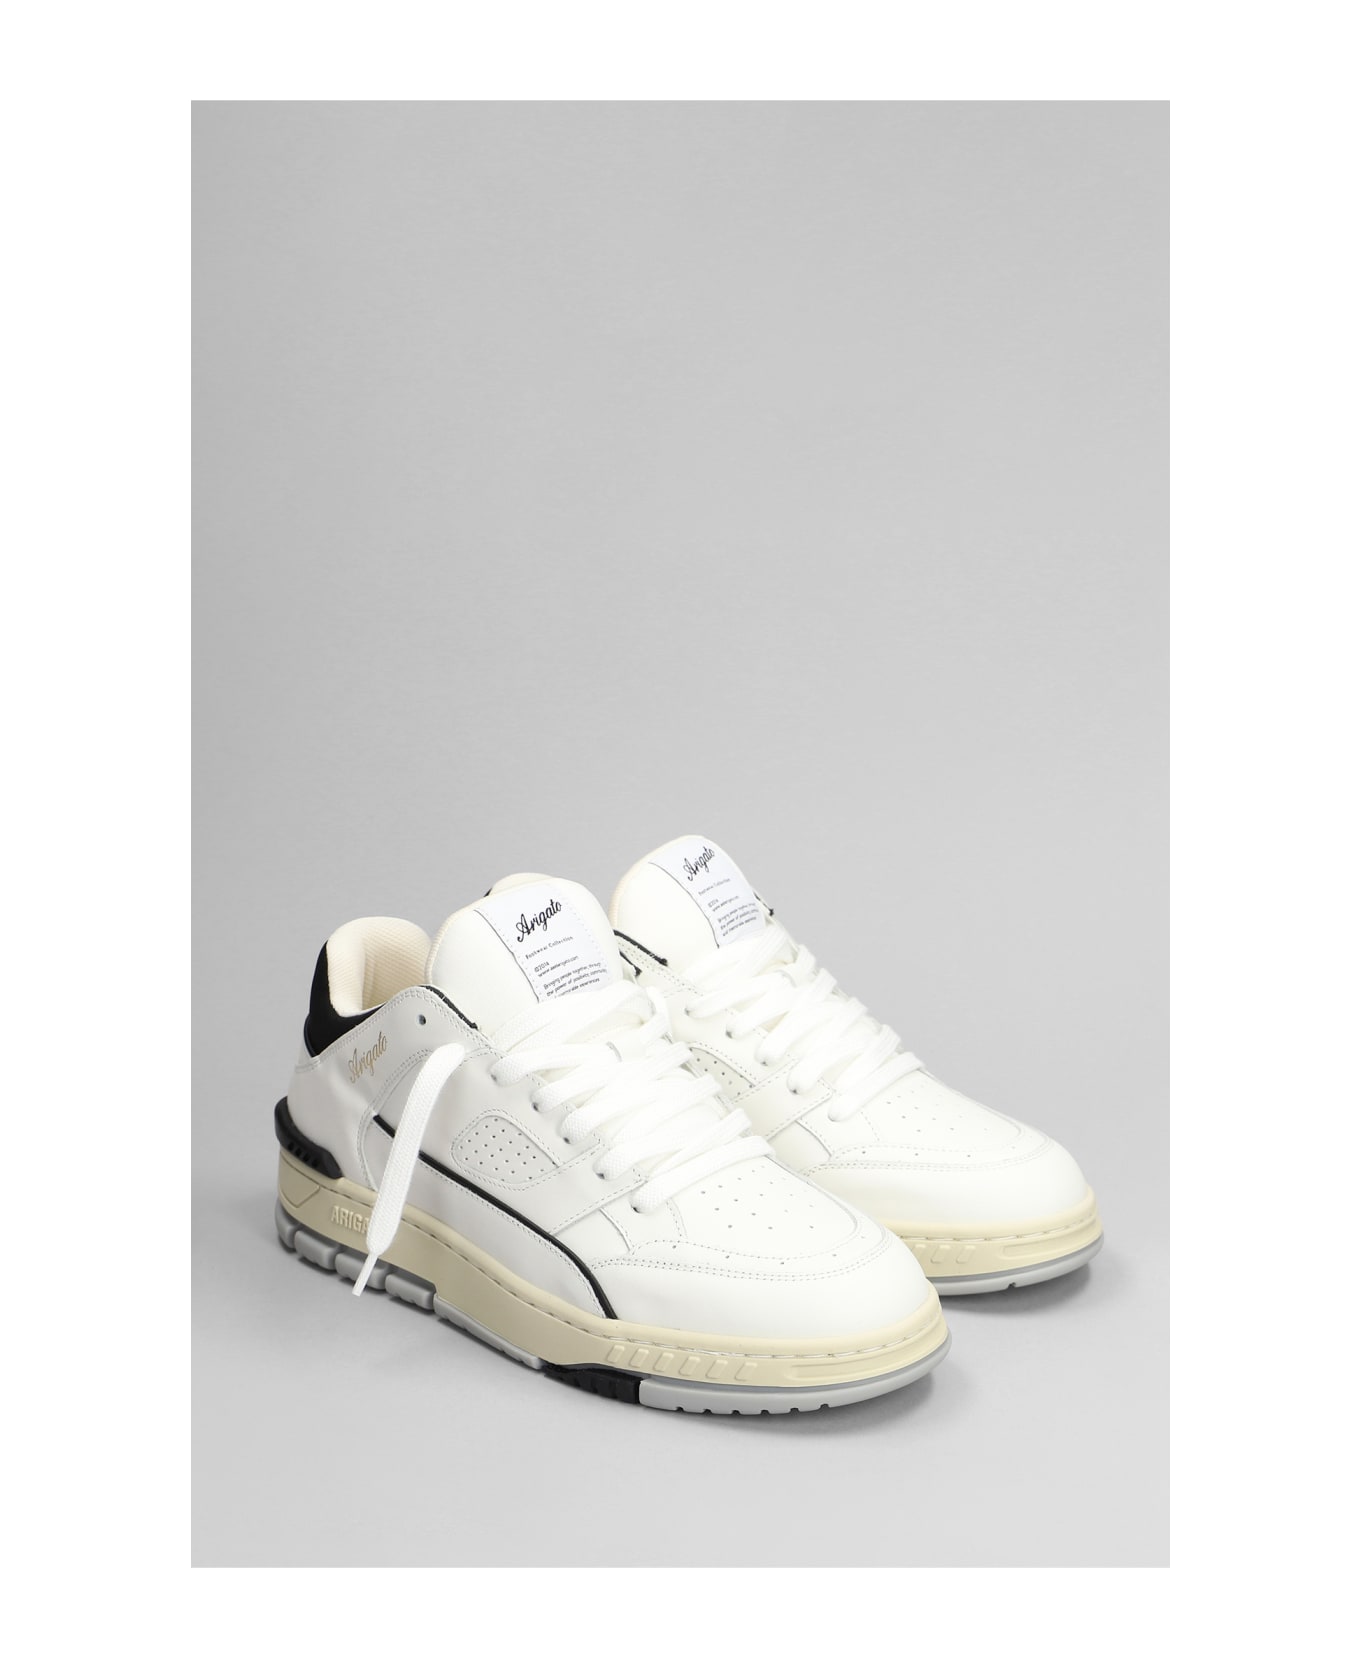 Axel Arigato Area Lo Sneaker Sneakers In White Leather - white